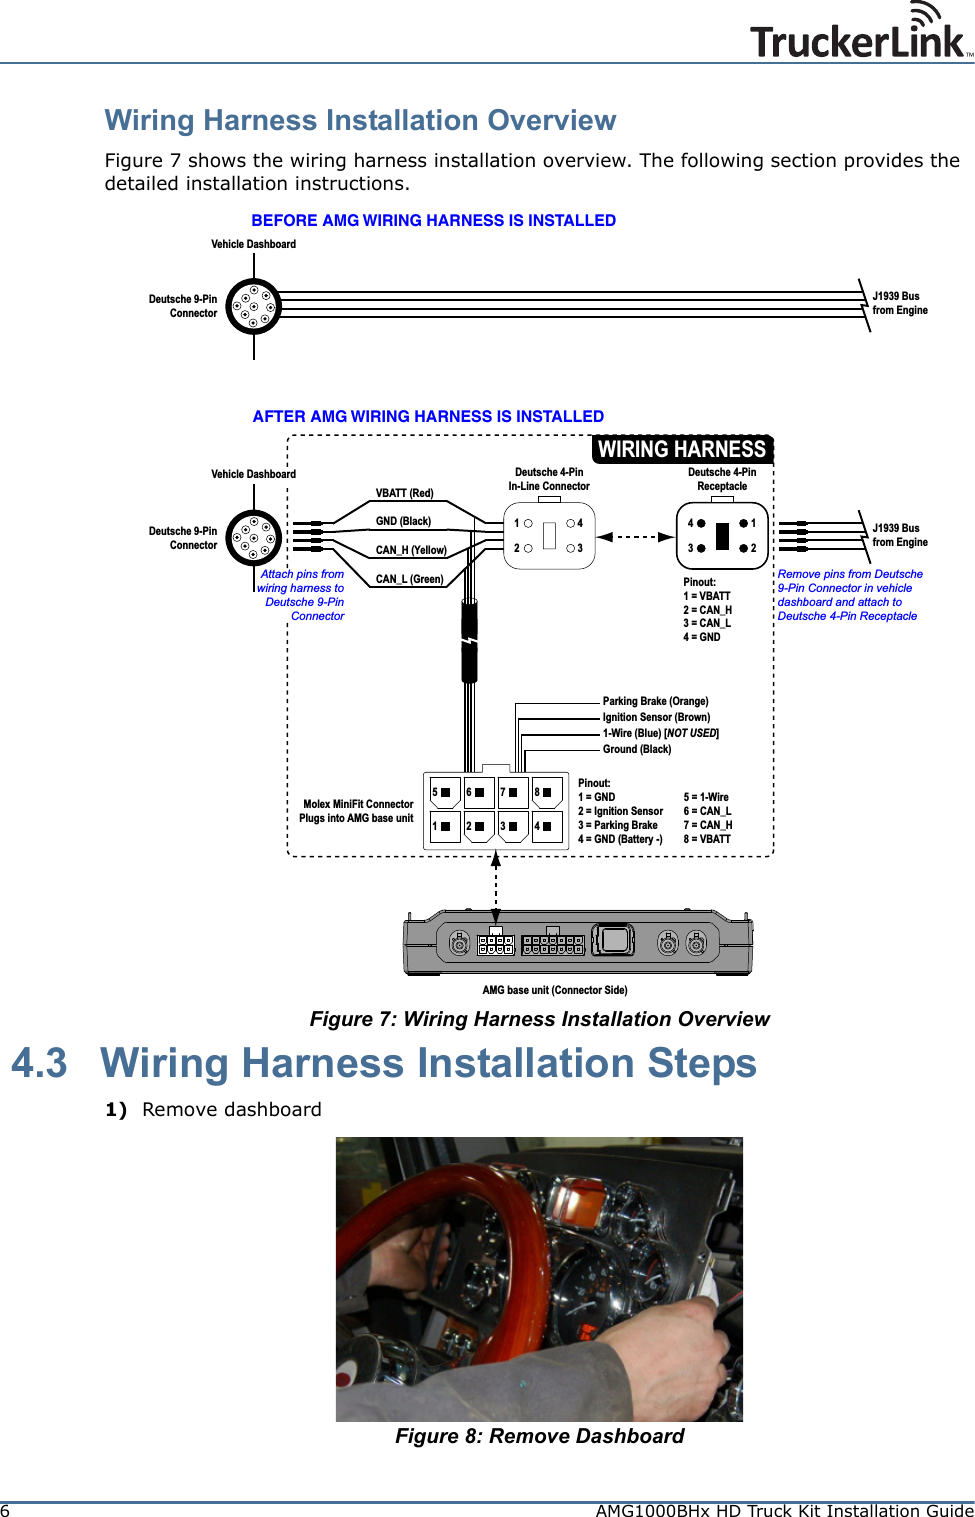 6AMG1000BHx HD Truck Kit Installation GuideWiring Harness Installation OverviewFigure 7 shows the wiring harness installation overview. The following section provides the detailed installation instructions.Figure 7: Wiring Harness Installation Overview 4.3 Wiring Harness Installation Steps1) Remove dashboardFigure 8: Remove Dashboard4312Deutsche 4-PinReceptacleDeutsche 9-PinConnectorJ1939 Busfrom EngineDeutsche 9-PinConnectorJ1939 Busfrom EnginePinout:1 = VBATT2 = CAN_H3 = CAN_L4 = GNDDeutsche 4-PinIn-Line ConnectorRemove pins from Deutsche9-Pin Connector in vehicledashboard and attach toDeutsche 4-Pin Receptacle1243VBATT (Red)GND (Black)CAN_H (Yellow)CAN_L (Green)Vehicle DashboardParking Brake (Orange)Ignition Sensor (Brown)1-Wire (Blue) [NOT USED]Ground (Black)Molex MiniFit ConnectorPlugs into AMG base unit 12 4356 875 = 1-Wire6 = CAN_L7 = CAN_H8 = VBATTPinout:1 = GND2 = Ignition Sensor3 = Parking Brake4 = GND (Battery -)WIRING HARNESSVehicle DashboardAttach pins fromwiring harness toDeutsche 9-PinConnectorAMG base unit (Connector Side)BEFORE AMG WIRING HARNESS IS INSTALLEDAFTER AMG WIRING HARNESS IS INSTALLED